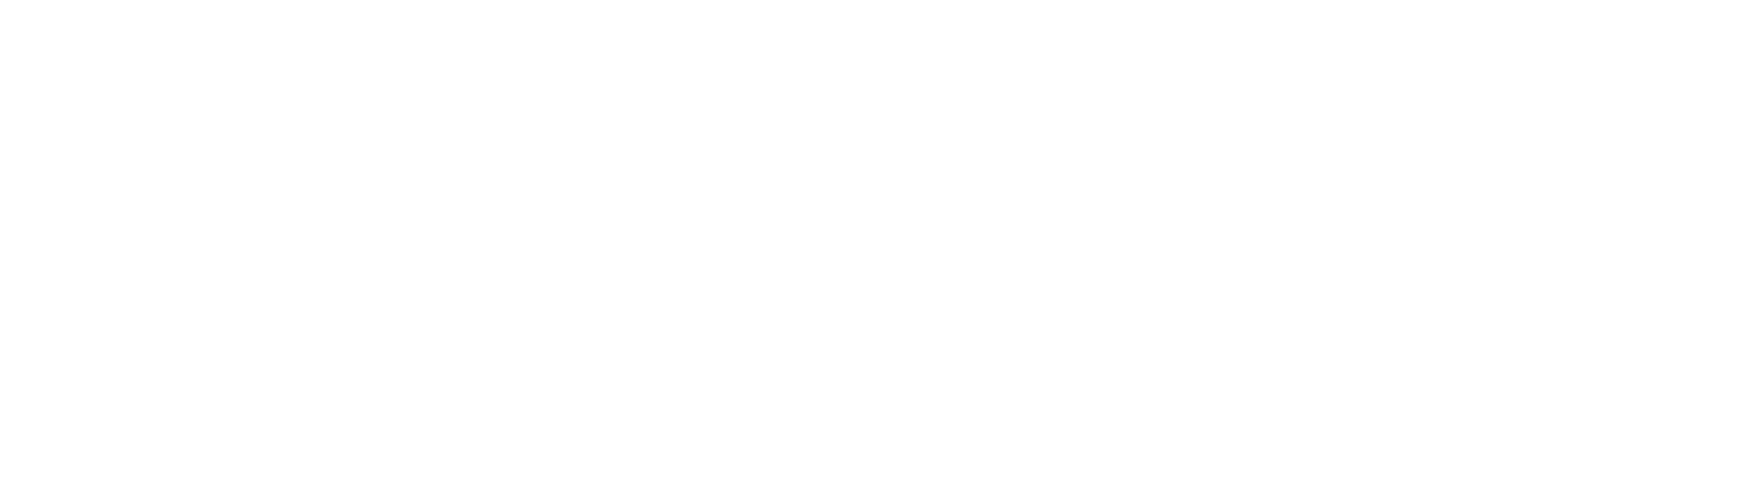 ELMNT_renewables_Logo-02